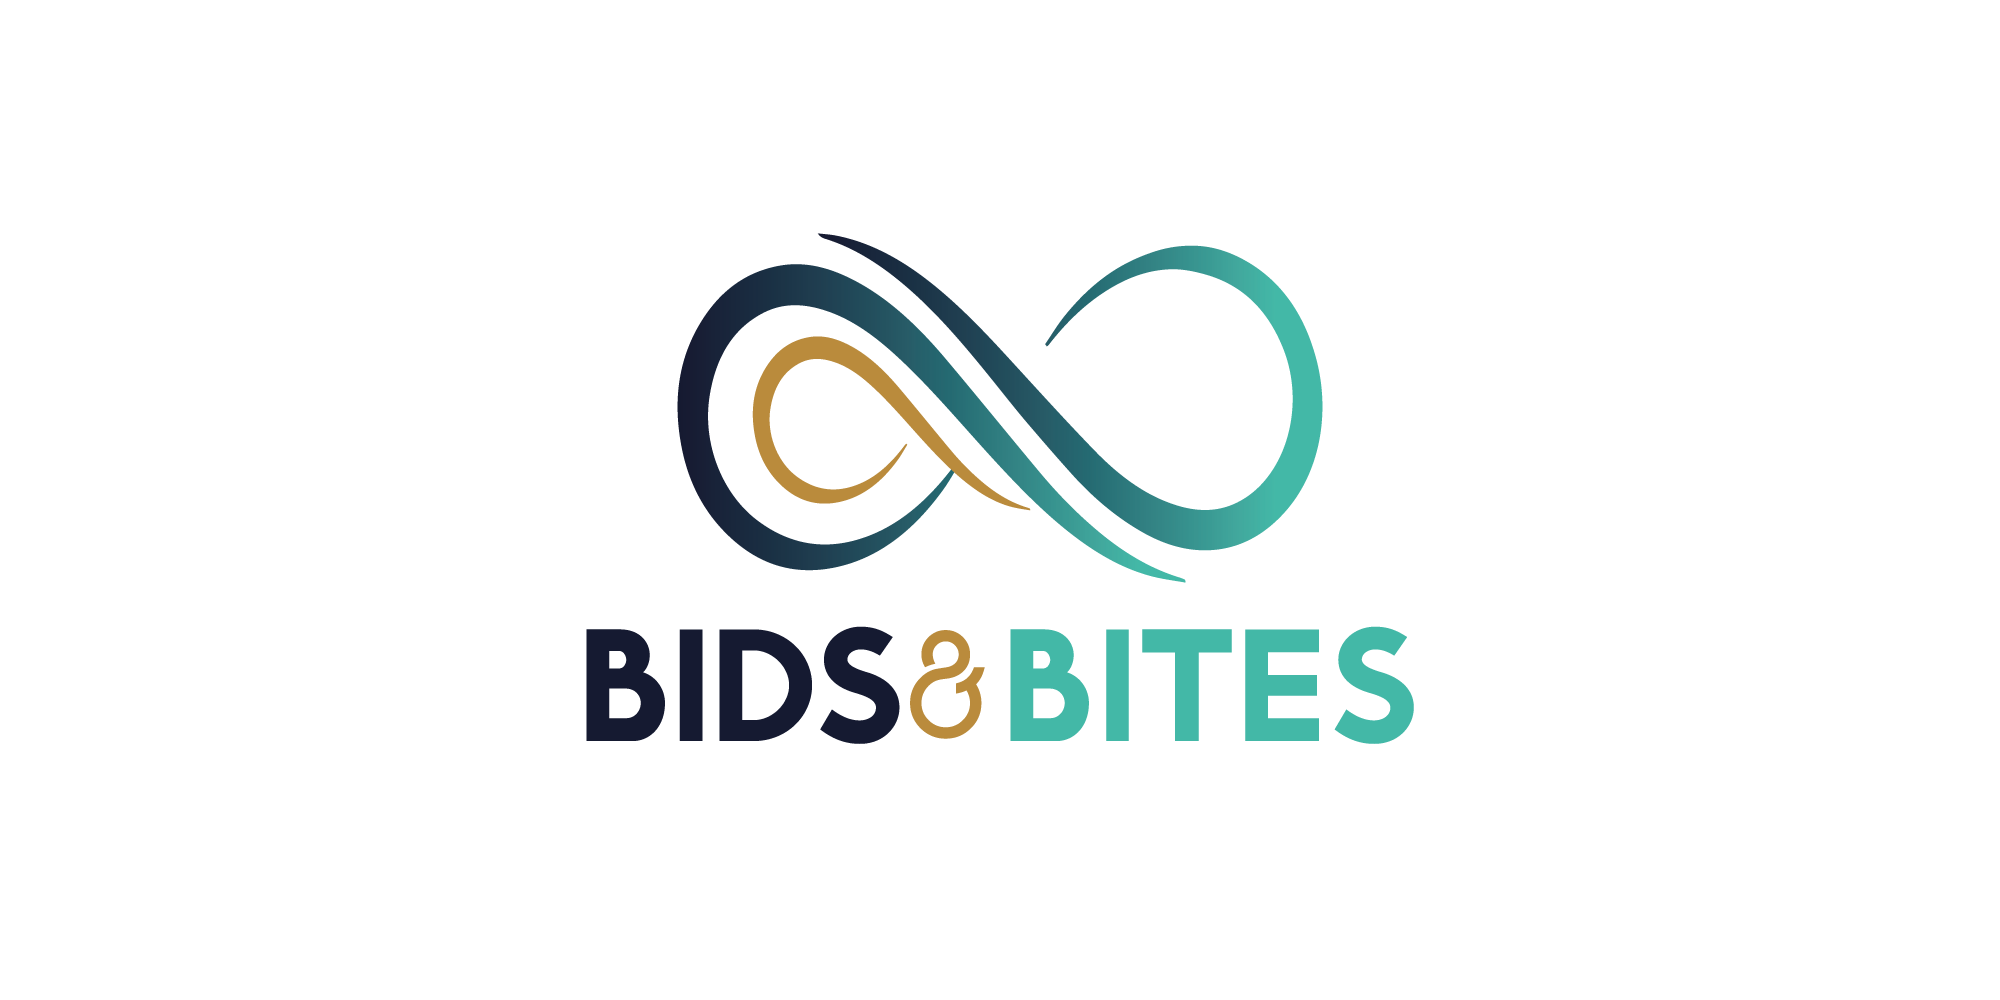 Bids-_-Bites-transparant